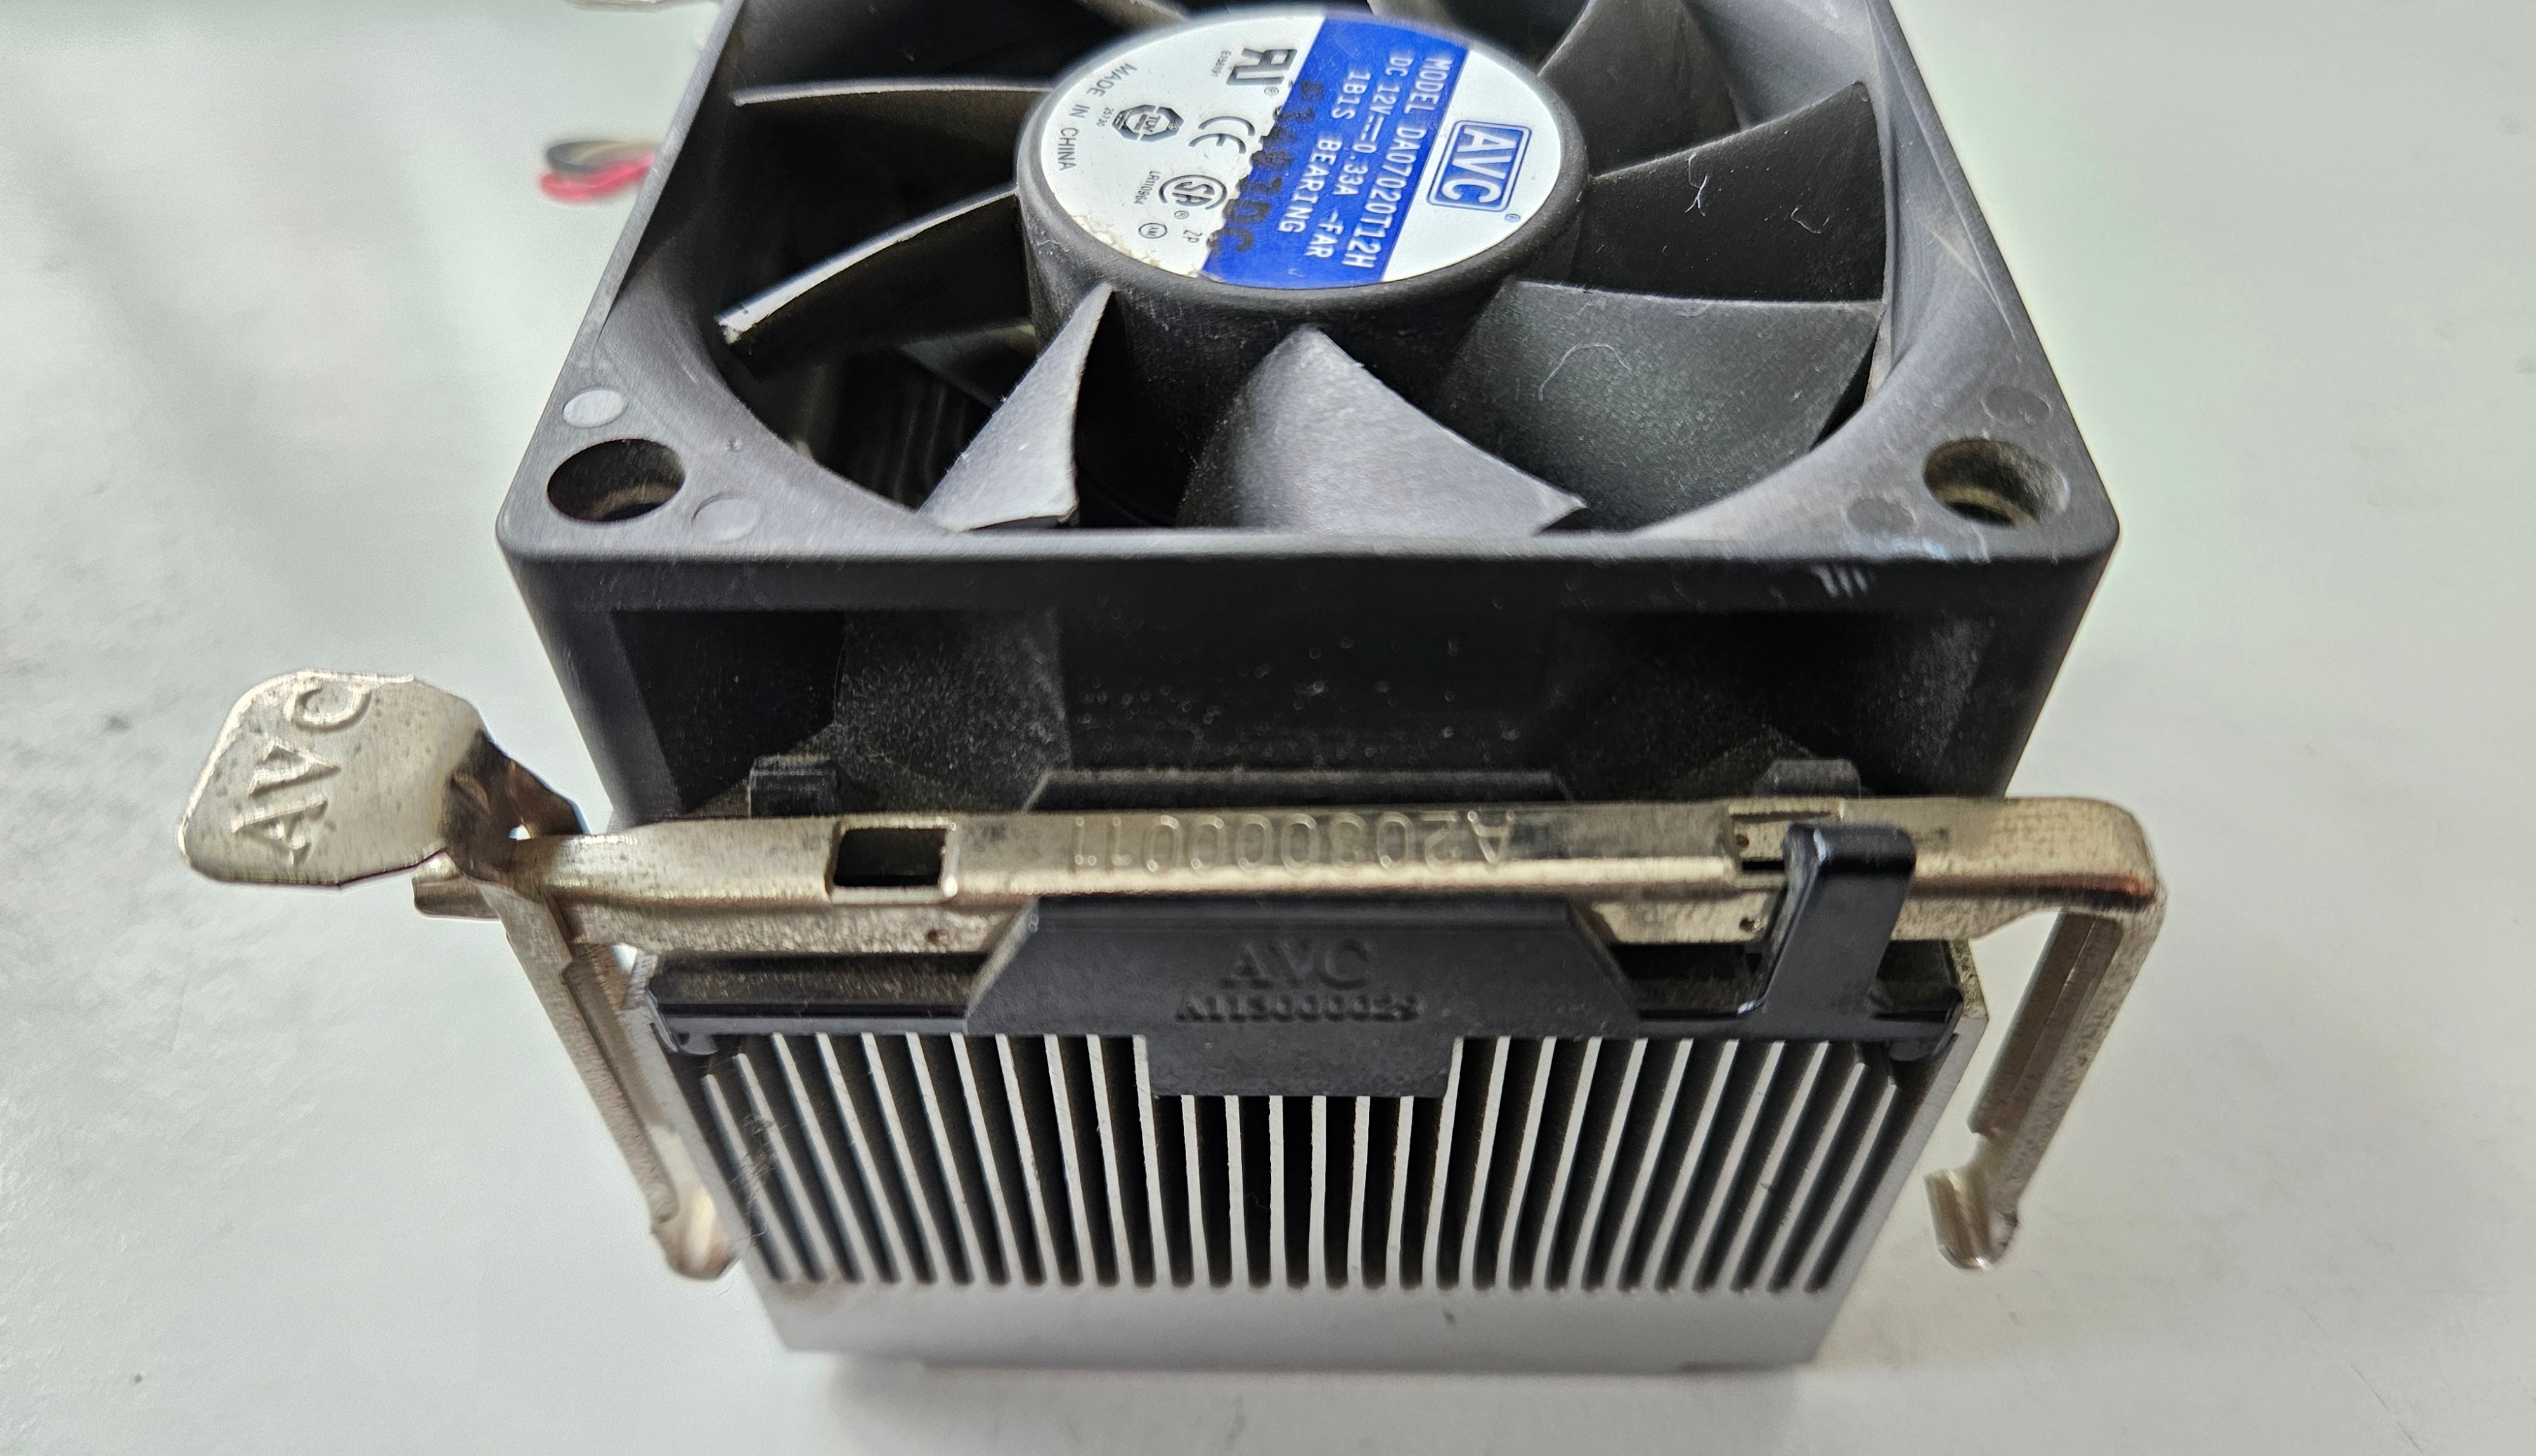 AVC DC12V 0.33A Far 1b1s Bearing CPU Cooling Fan with Heatsink ( DA07020T12H ) USED